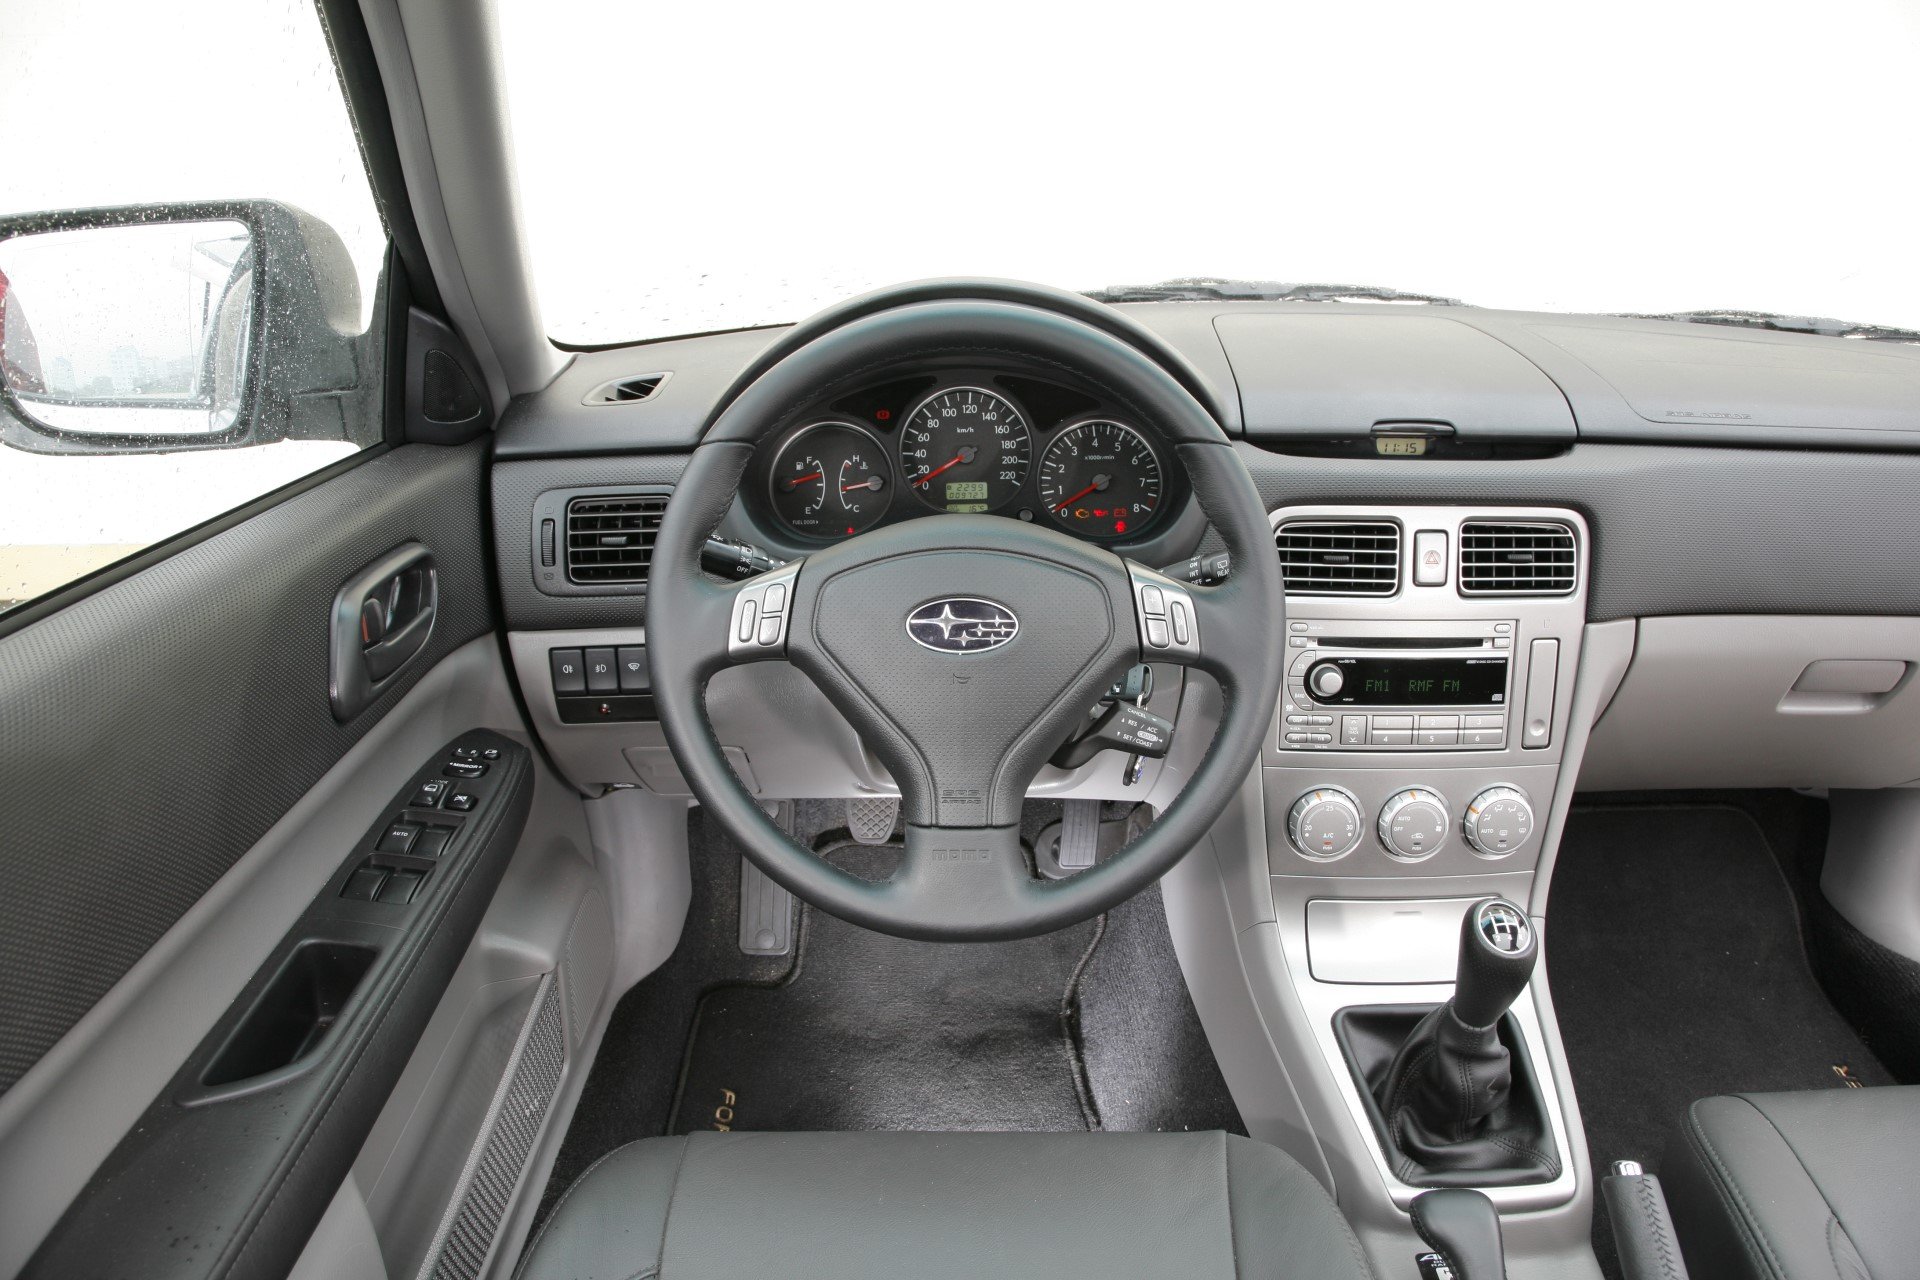 Uzywany SUV Subaru